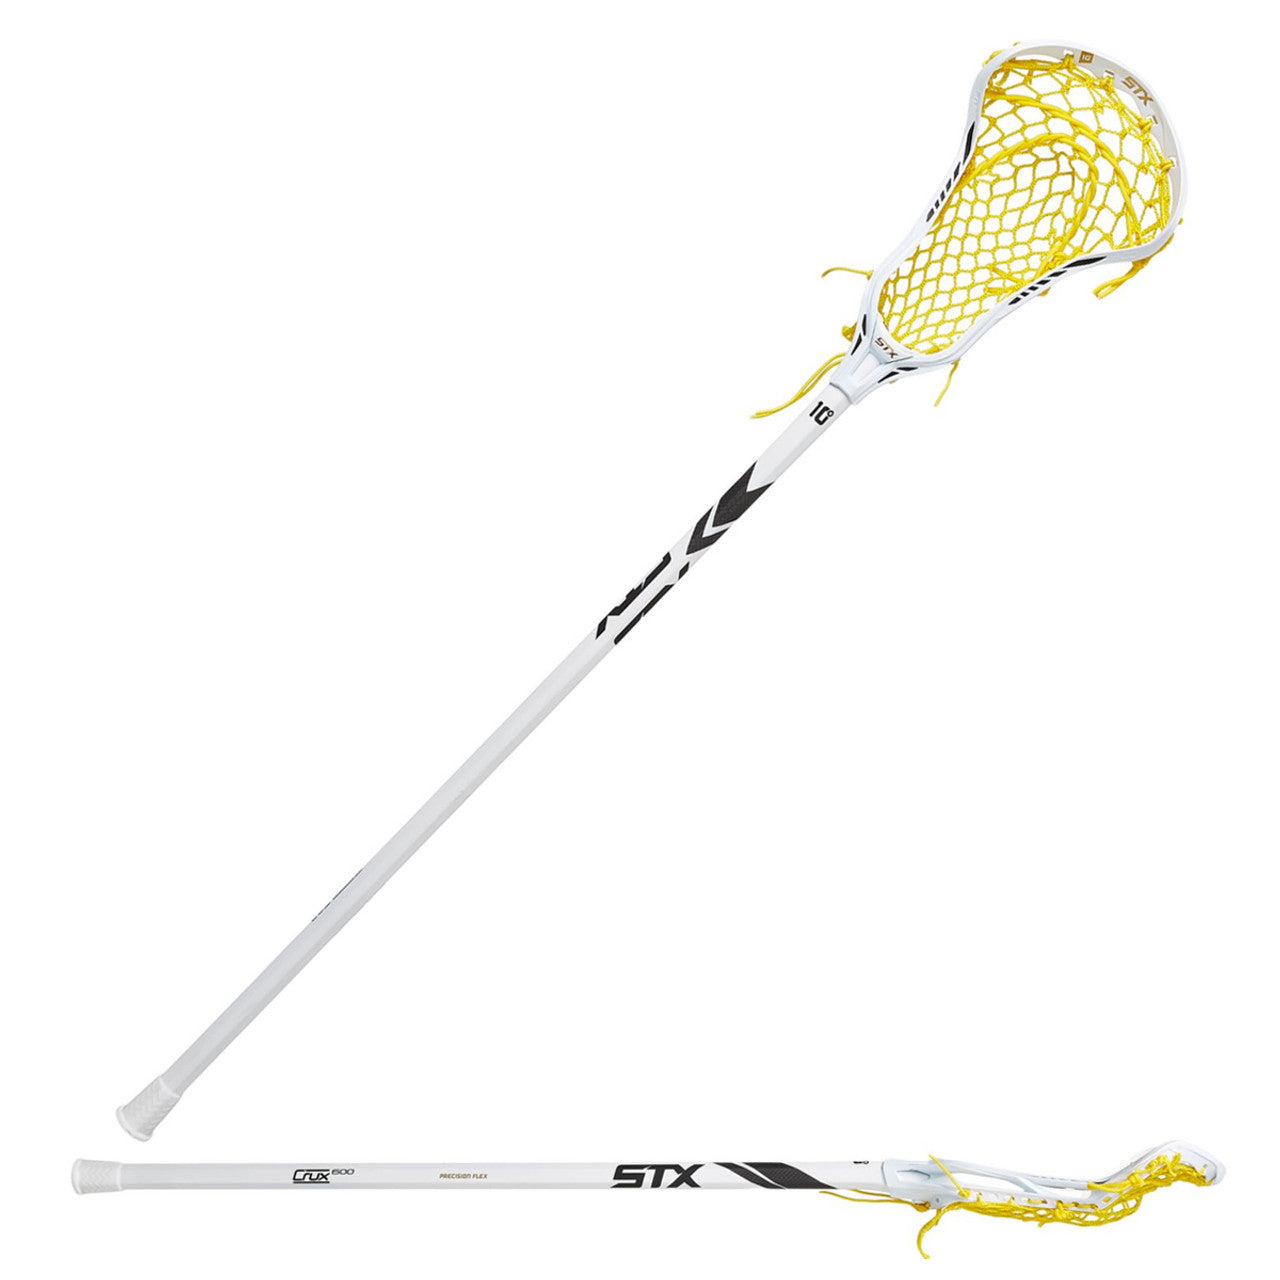 STX Crux 600 Complete Women's Lacrosse Stick with Crux 600 Handle